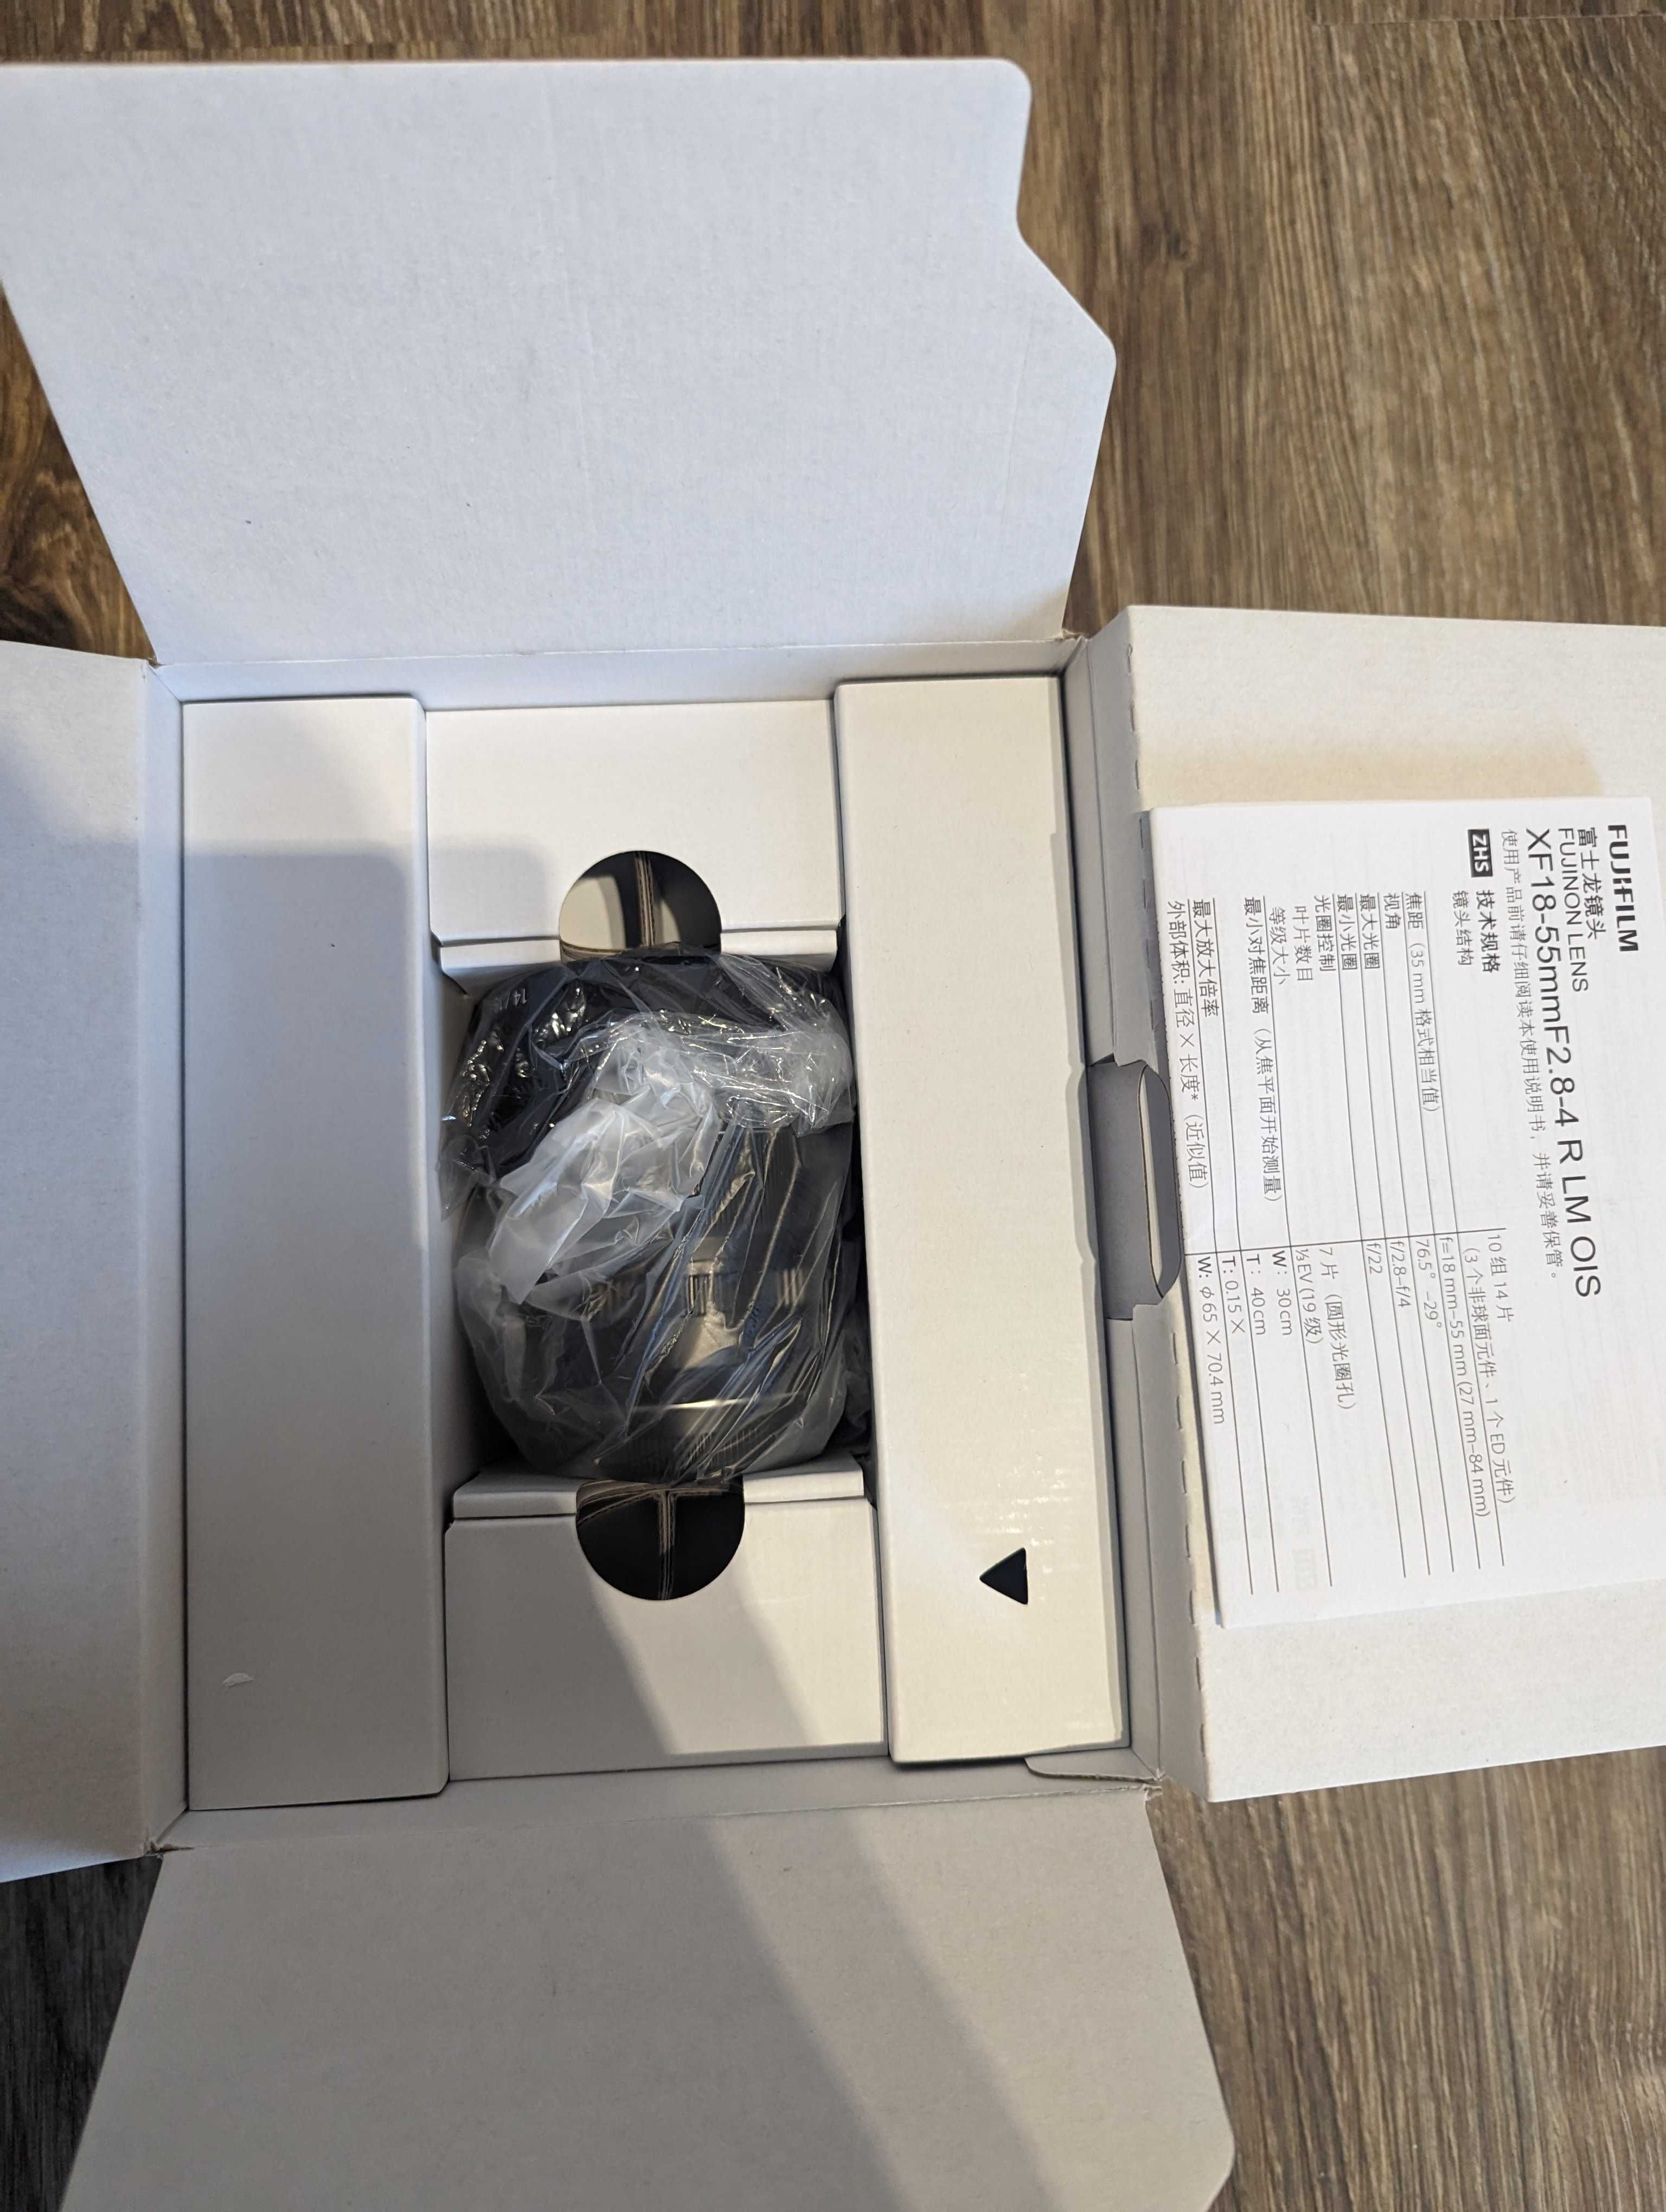 Fujifilm X-S10 kit with Lens XF 18-55mm f/2.8-4 R LM OIS Black